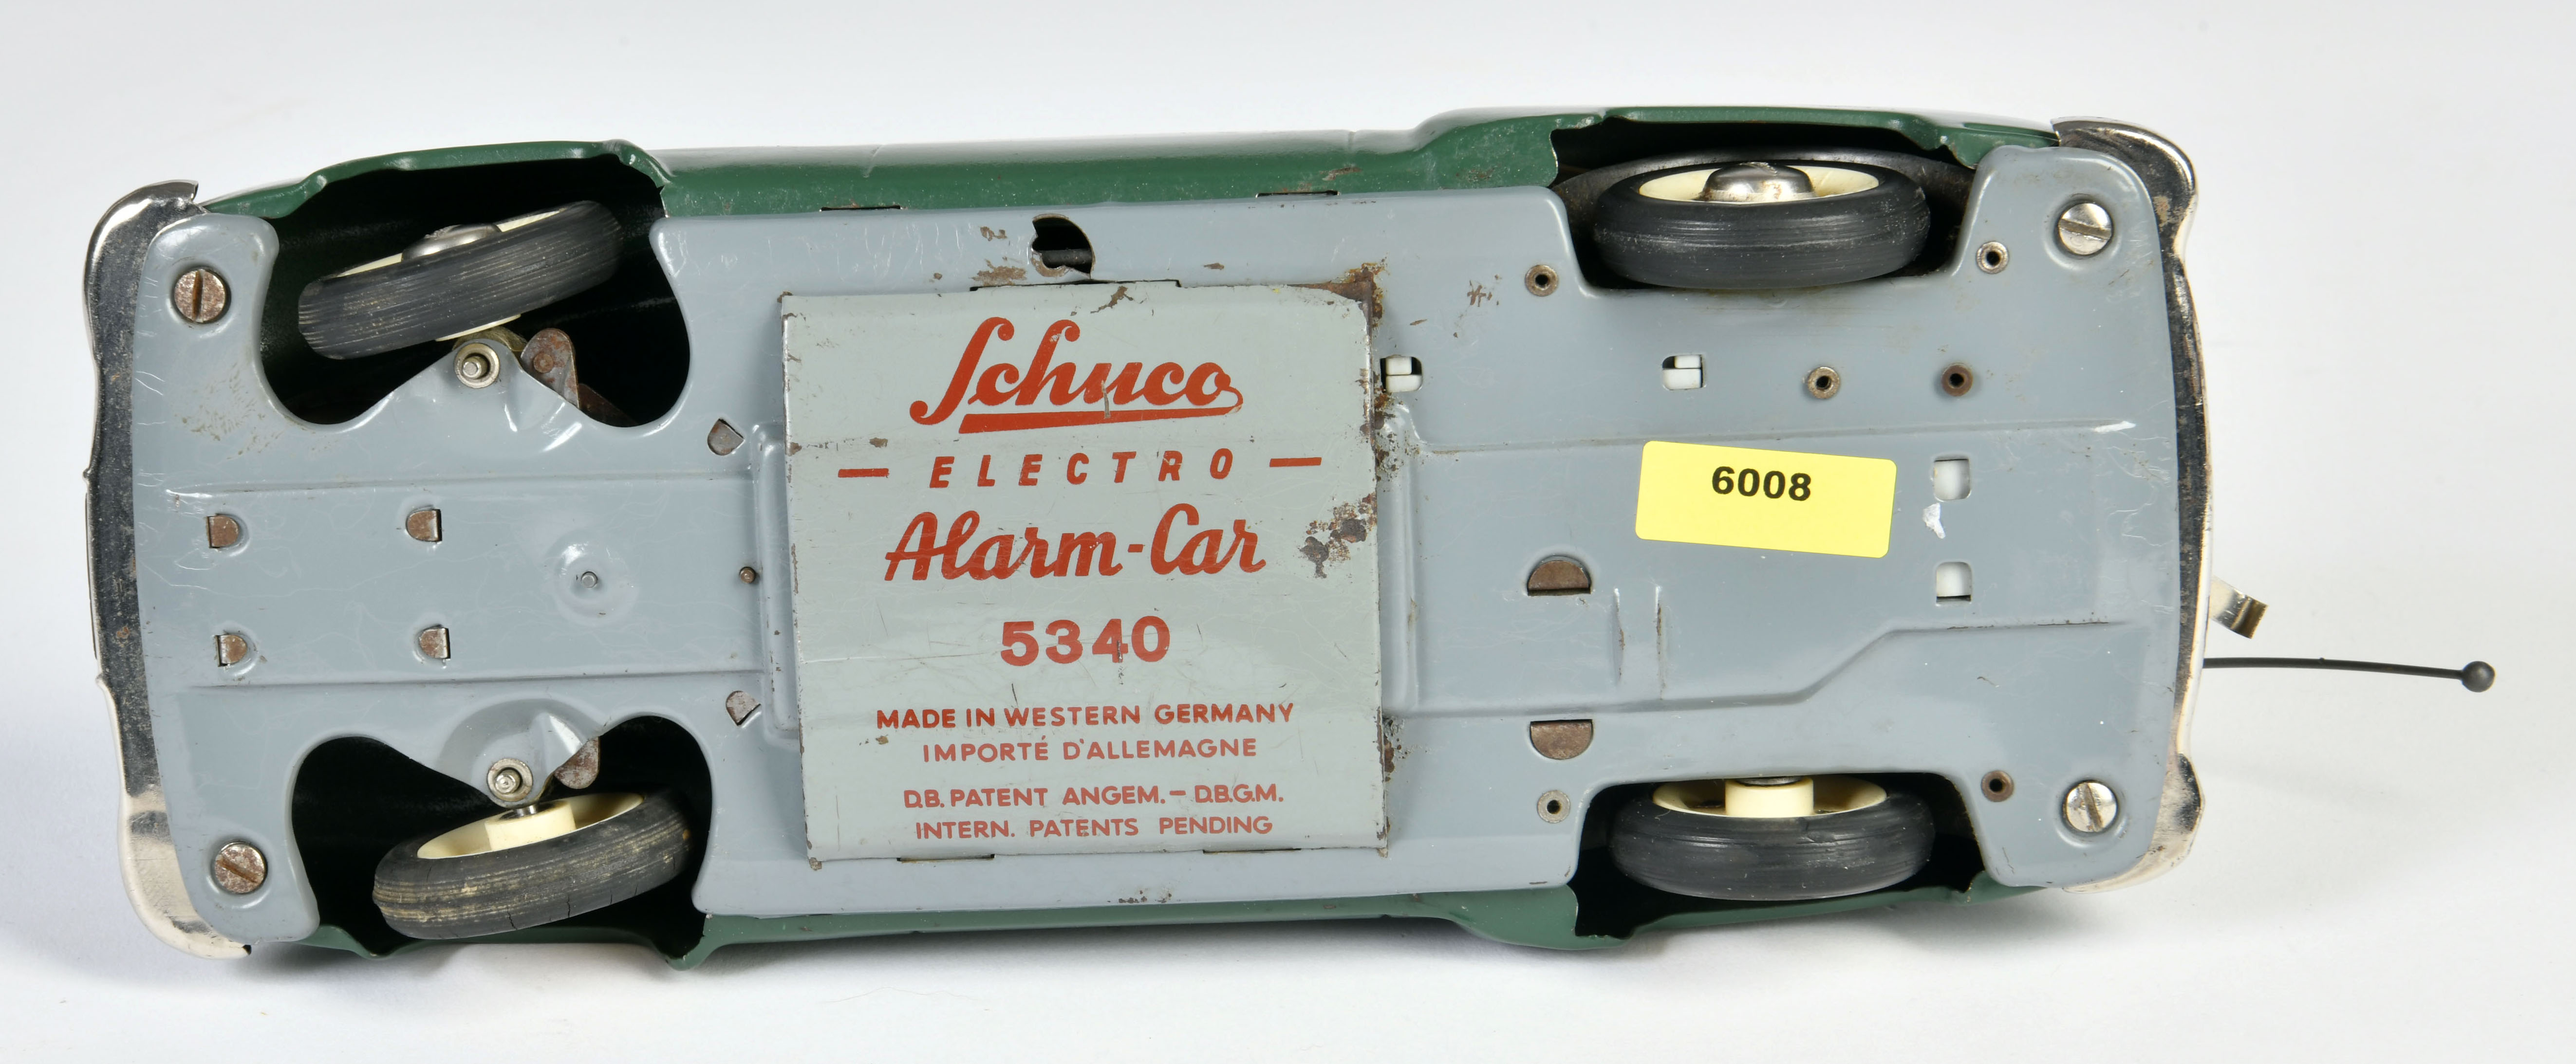 Schuco, Alarm Car 5340, W.-Germany, 22 cm, tin, paint d., defects, C 3 - Image 3 of 3